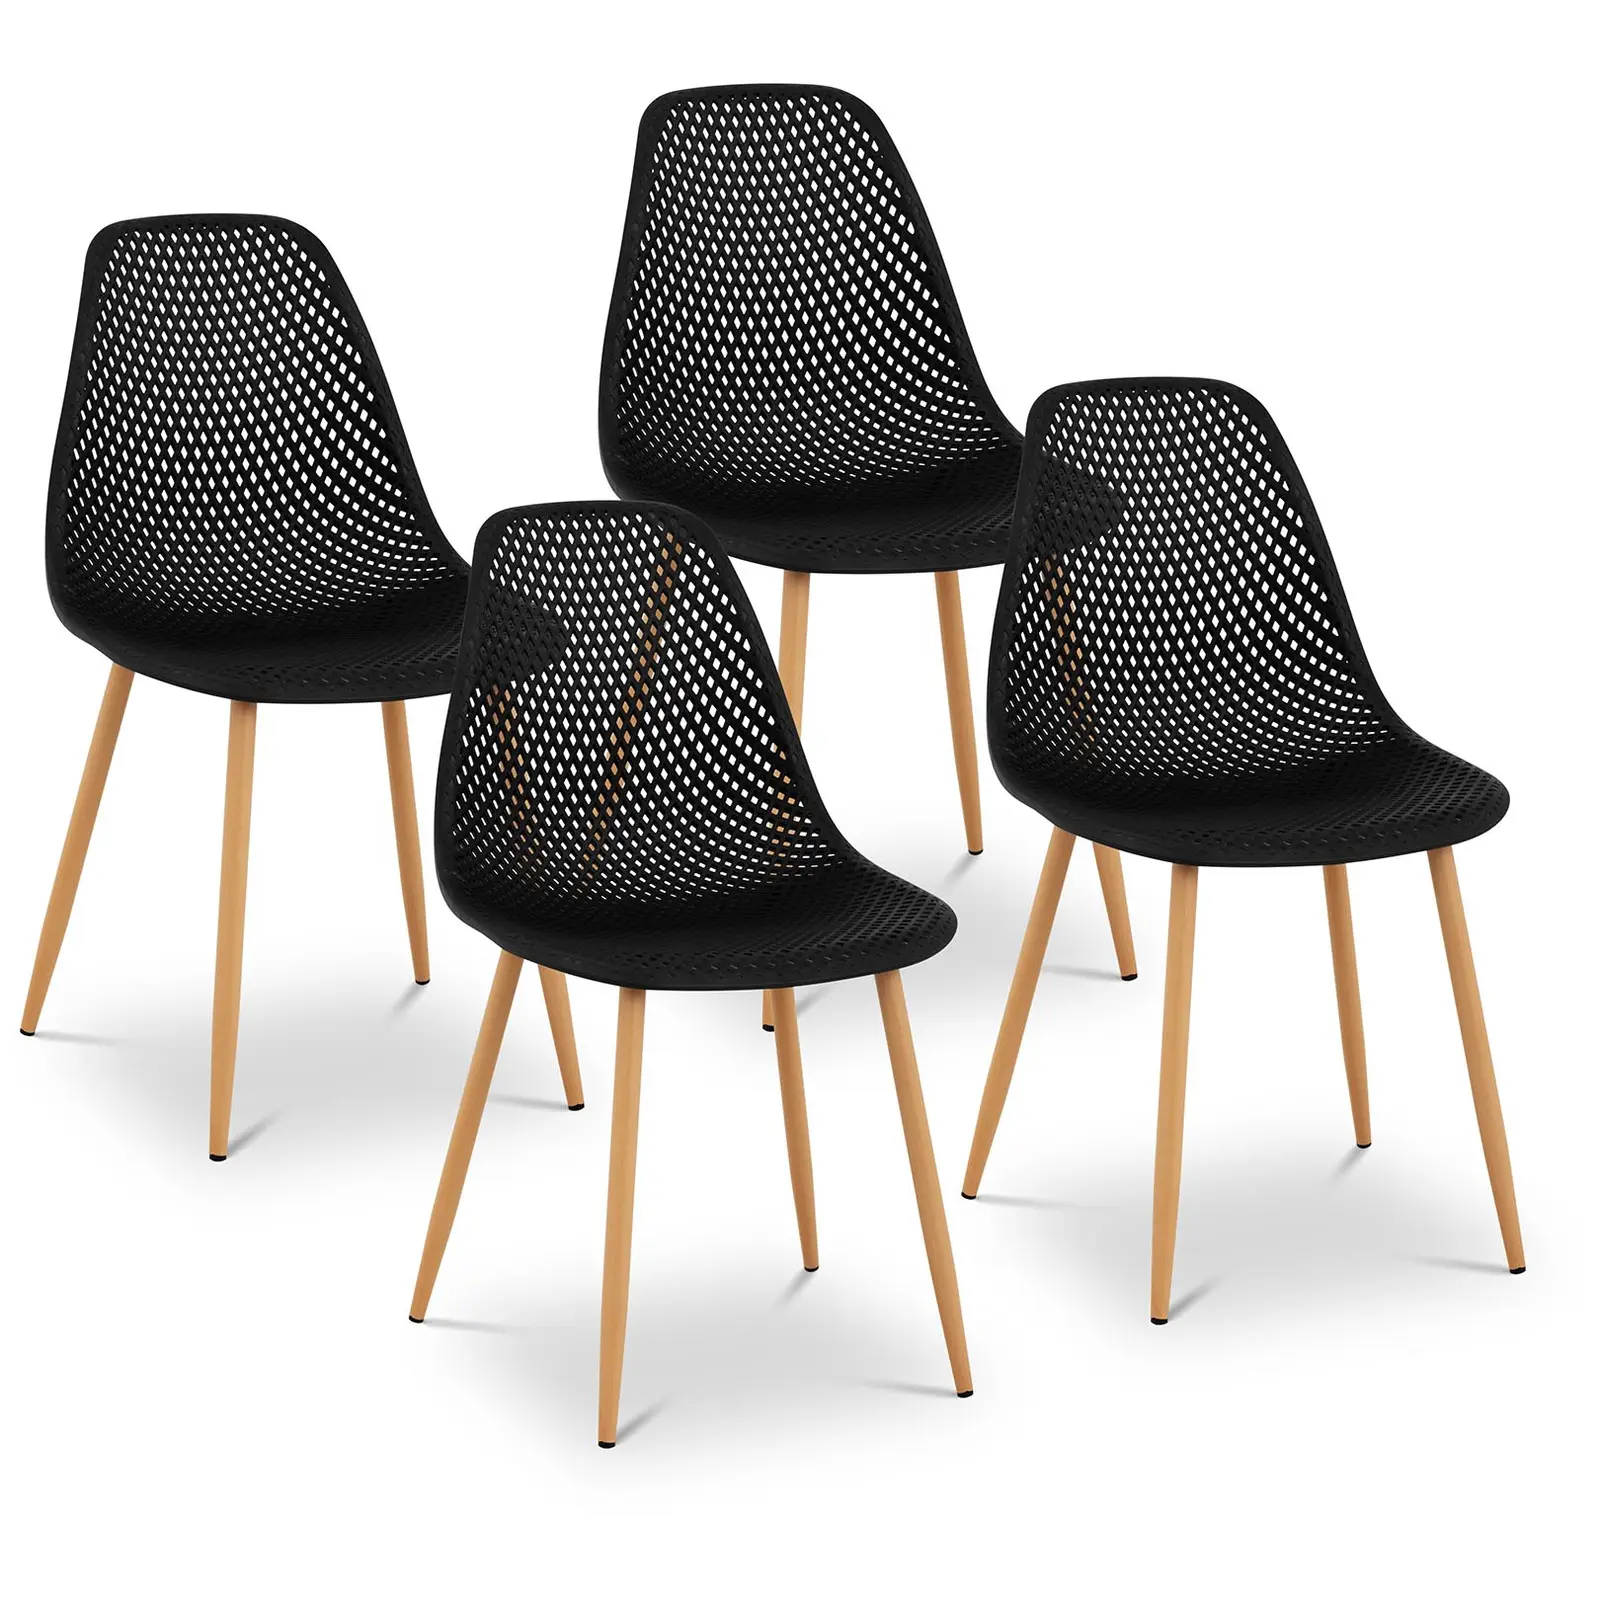 Spisebordsstole - 4 stk. - maks. 150 kg - sæde 52 x 46,5 cm - sorte